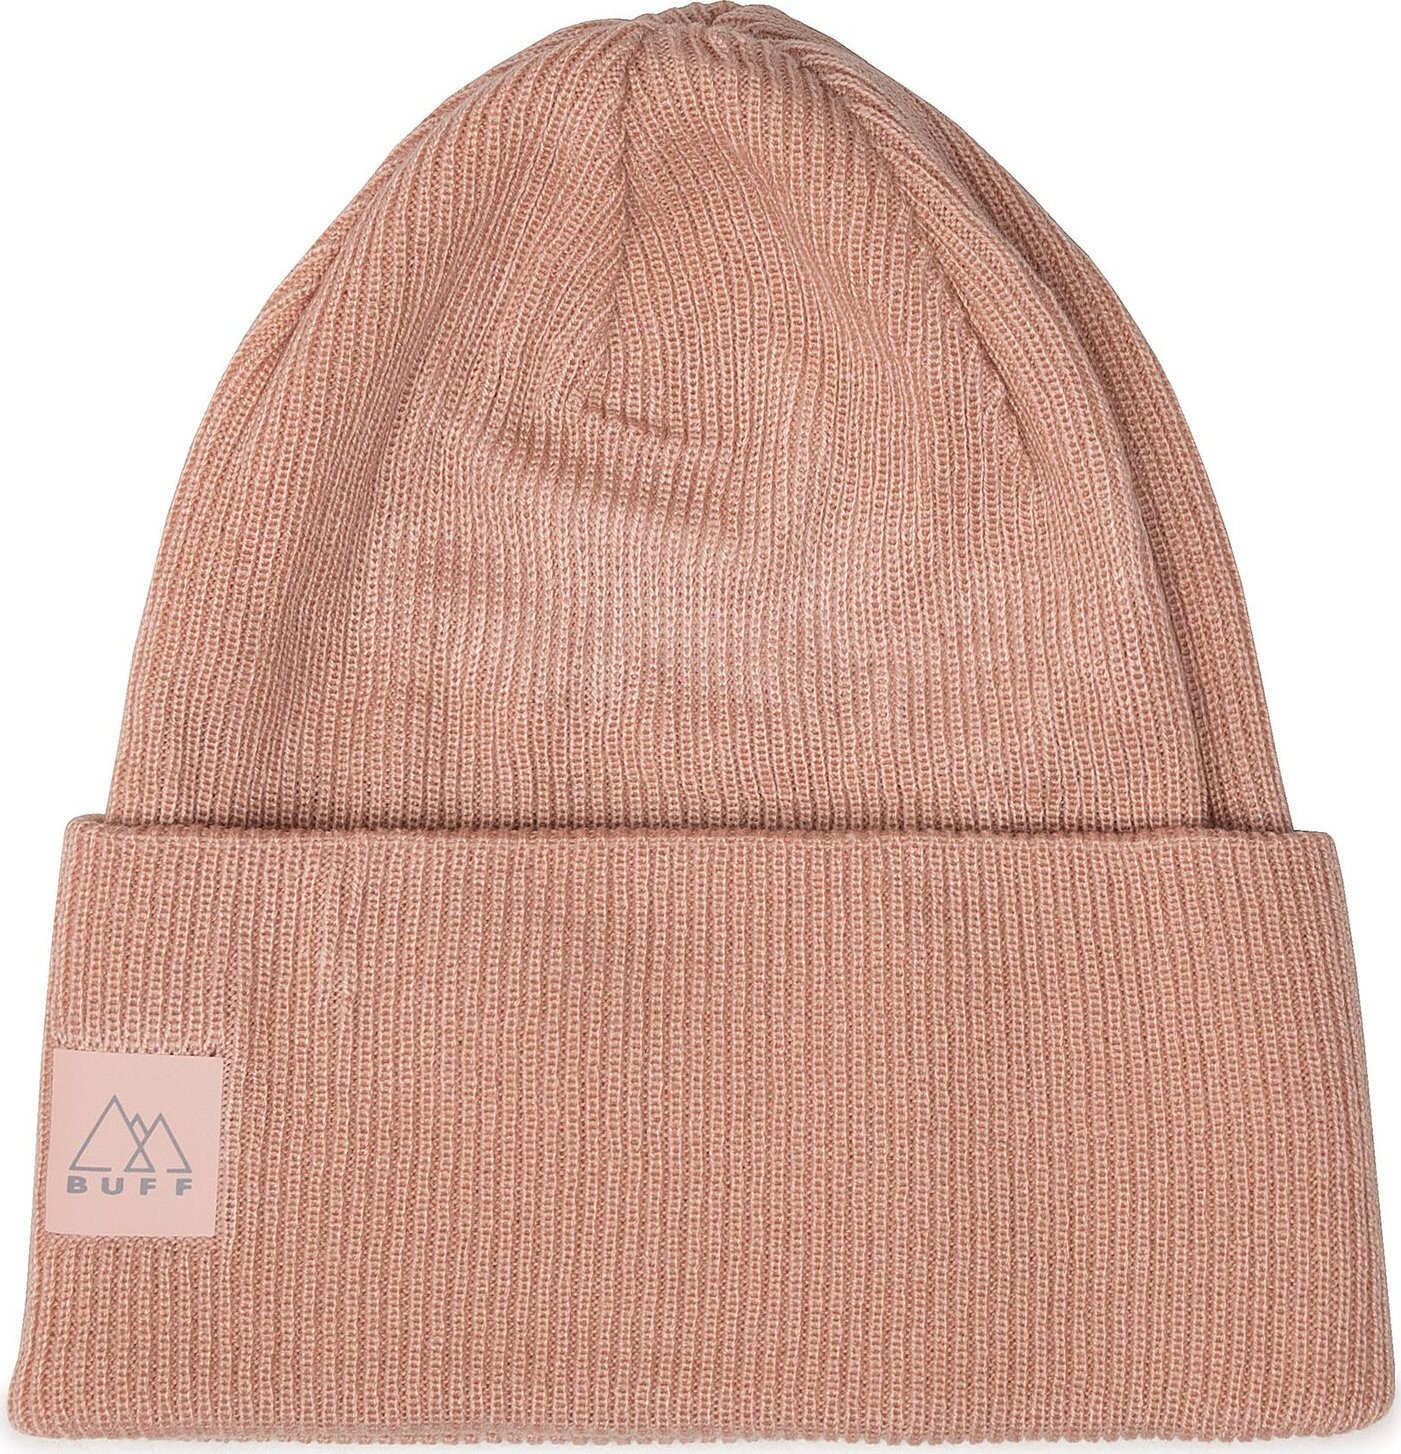 Čepice Buff Knitted Hat 126483.508.10.00 Crossknit Pale Pink